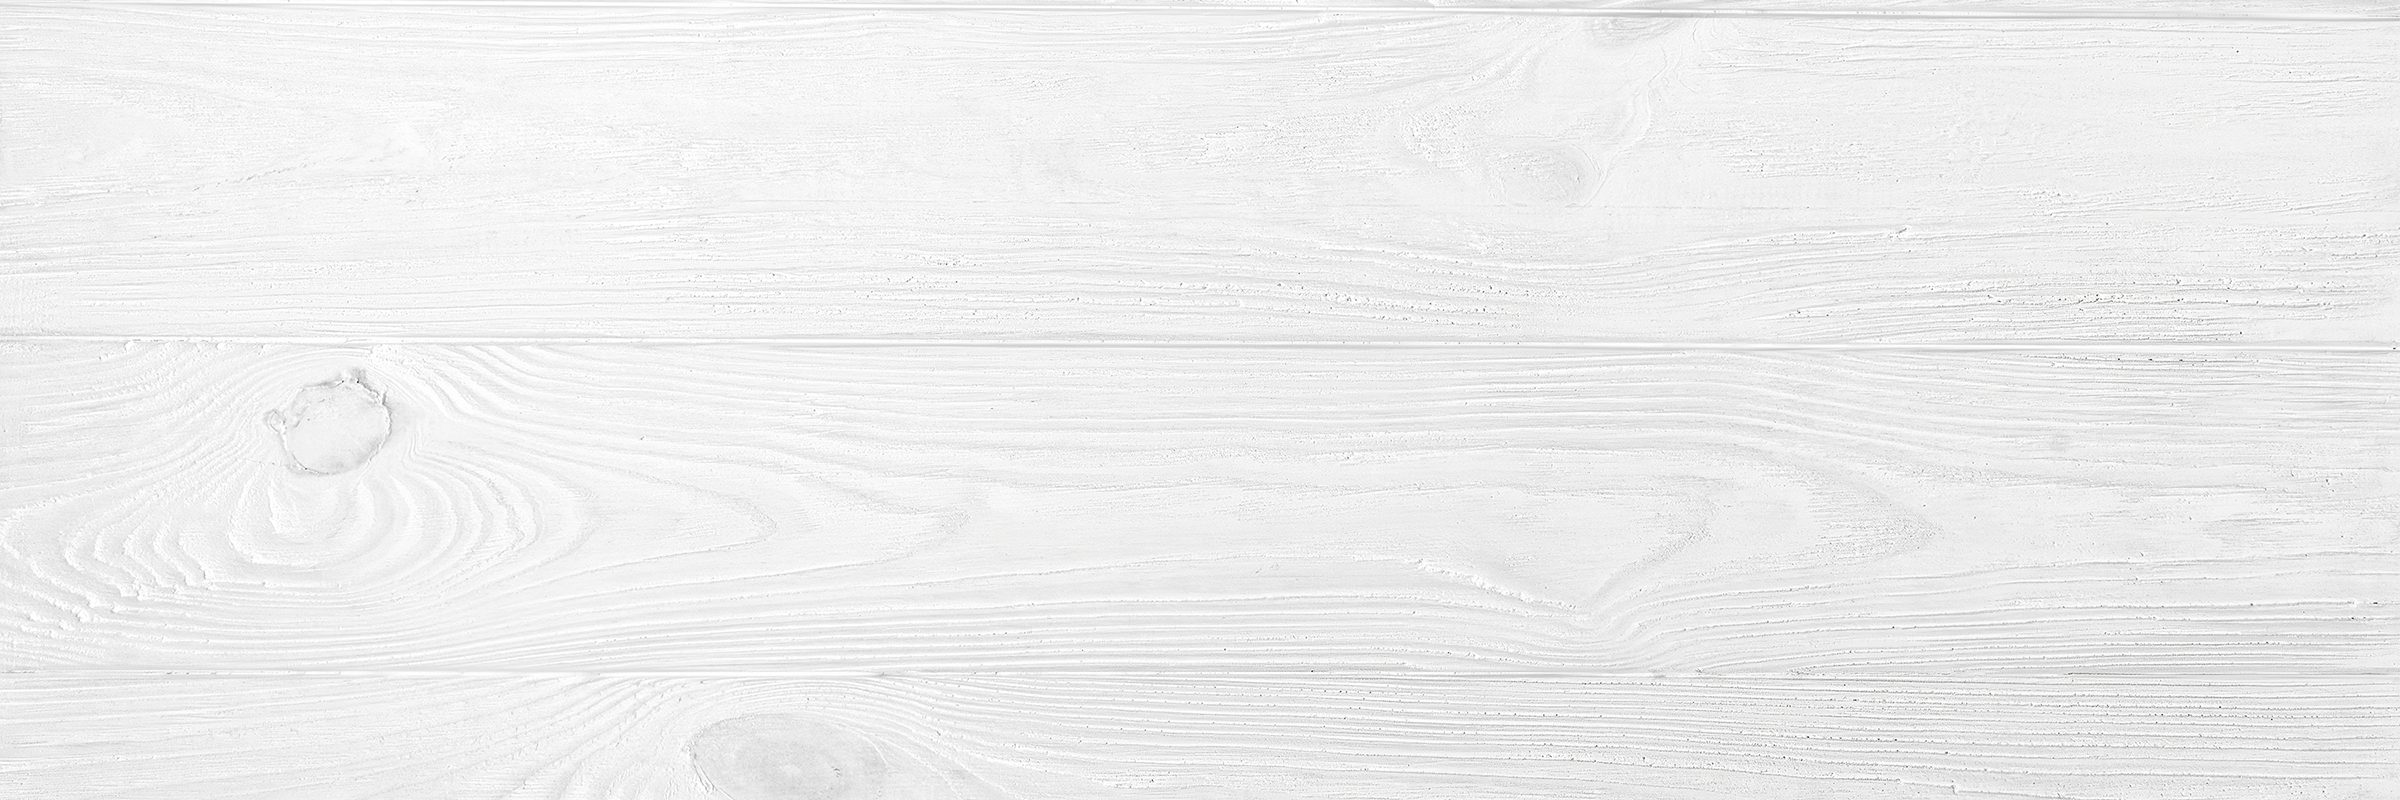 Website Masthead - White Wood Grain